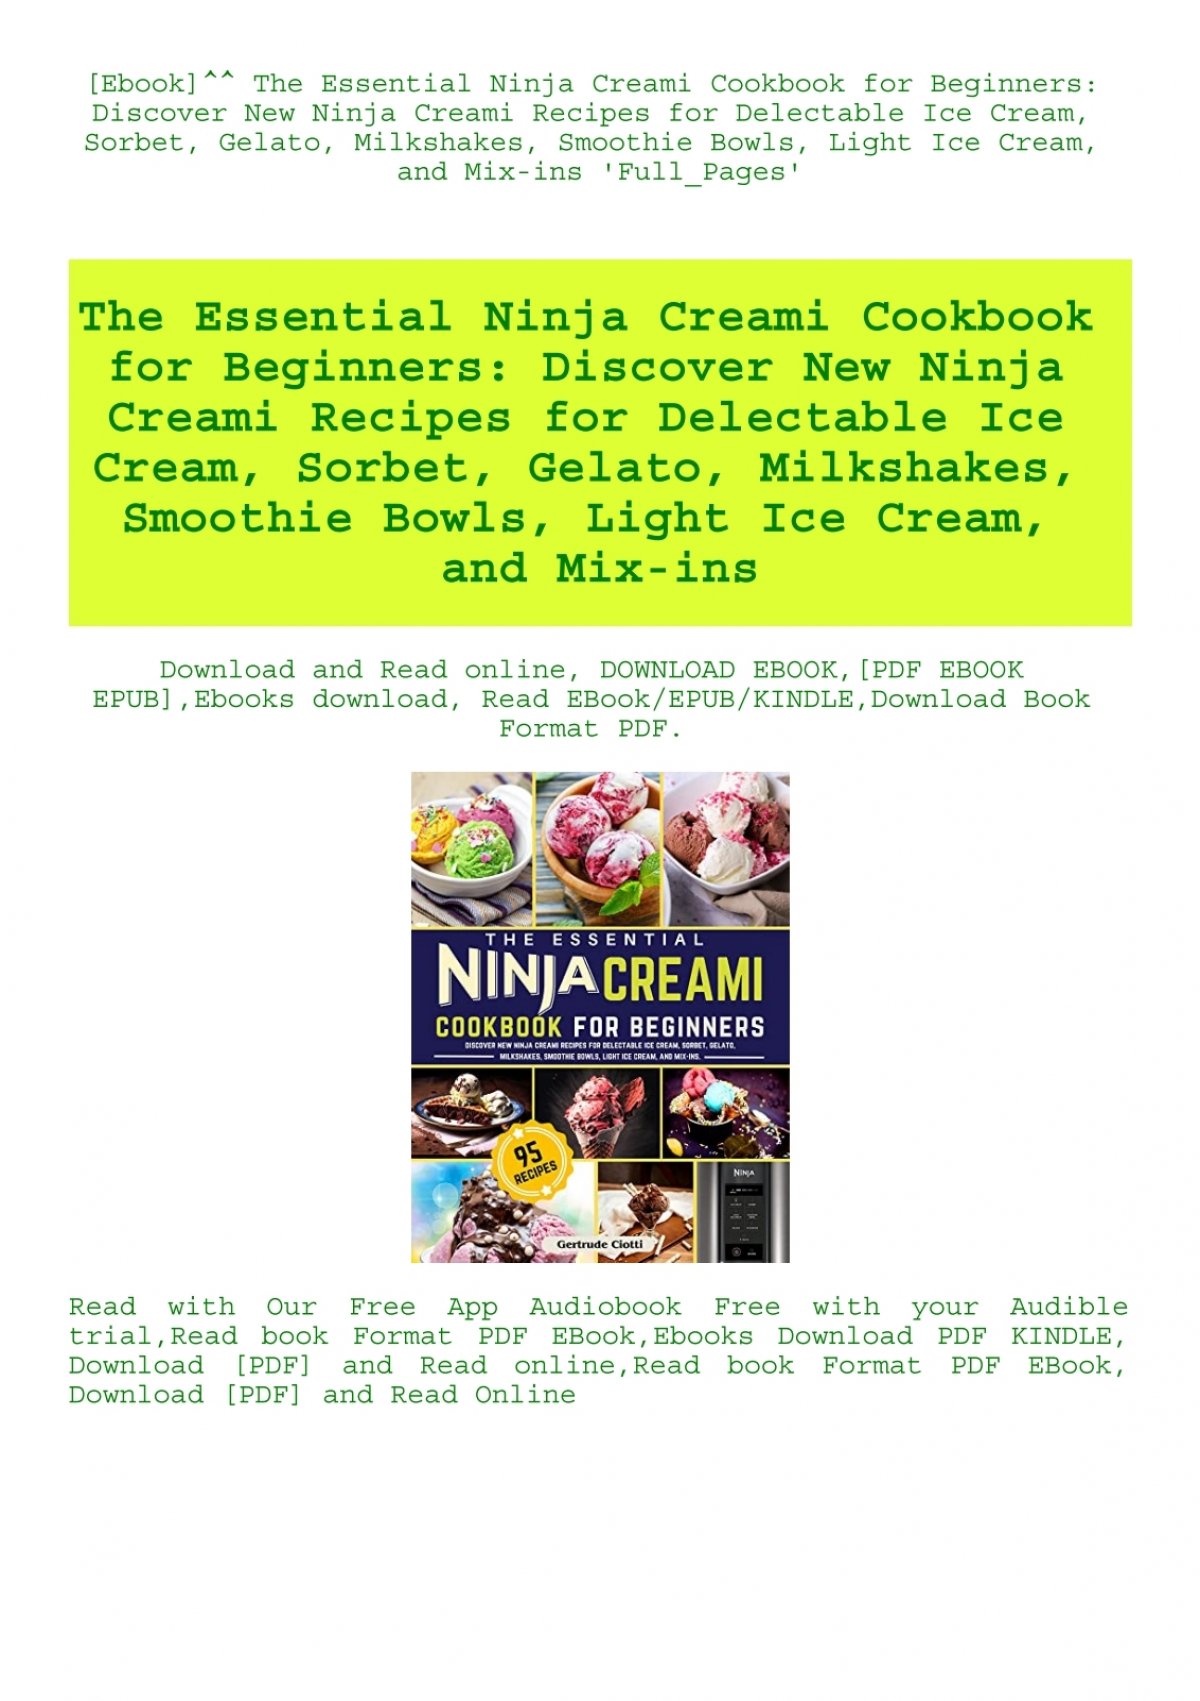 The Latest Ninja Creami Cookbook (Paperback)